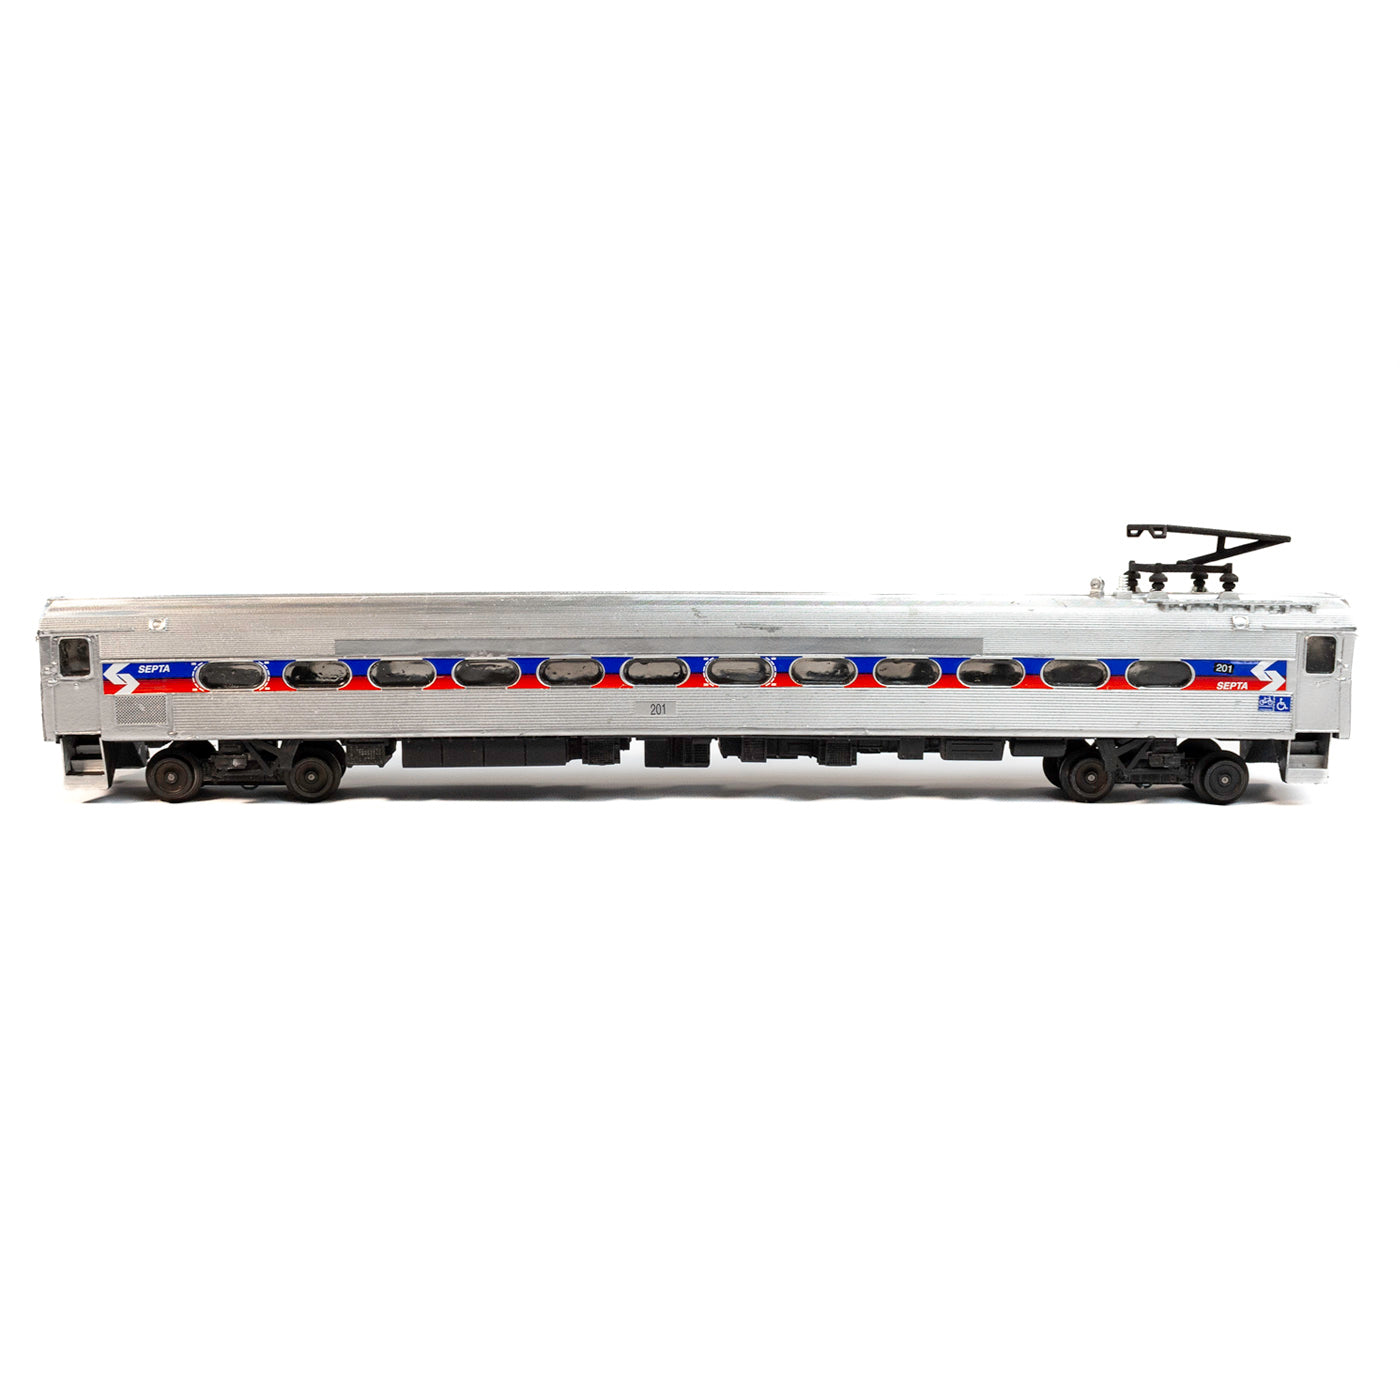 SEPTA Silverliner II O-Scale Handcrafted Display Model Train